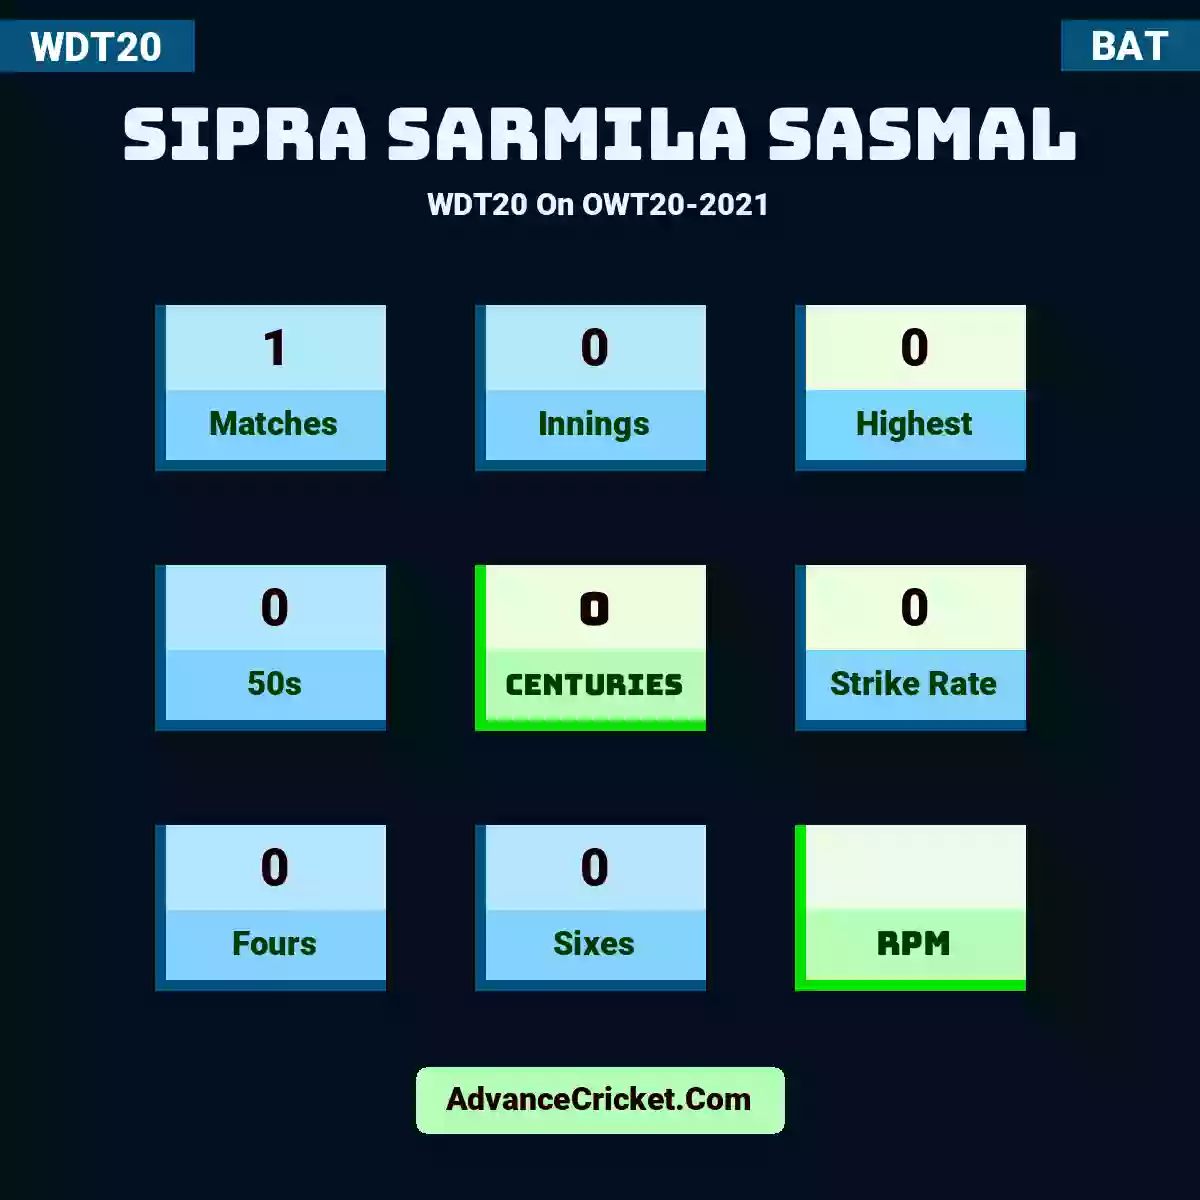 Sipra Sarmila Sasmal WDT20  On OWT20-2021, Sipra Sarmila Sasmal played 1 matches, scored 0 runs as highest, 0 half-centuries, and 0 centuries, with a strike rate of 0. S.Sarmila Sasmal hit 0 fours and 0 sixes.